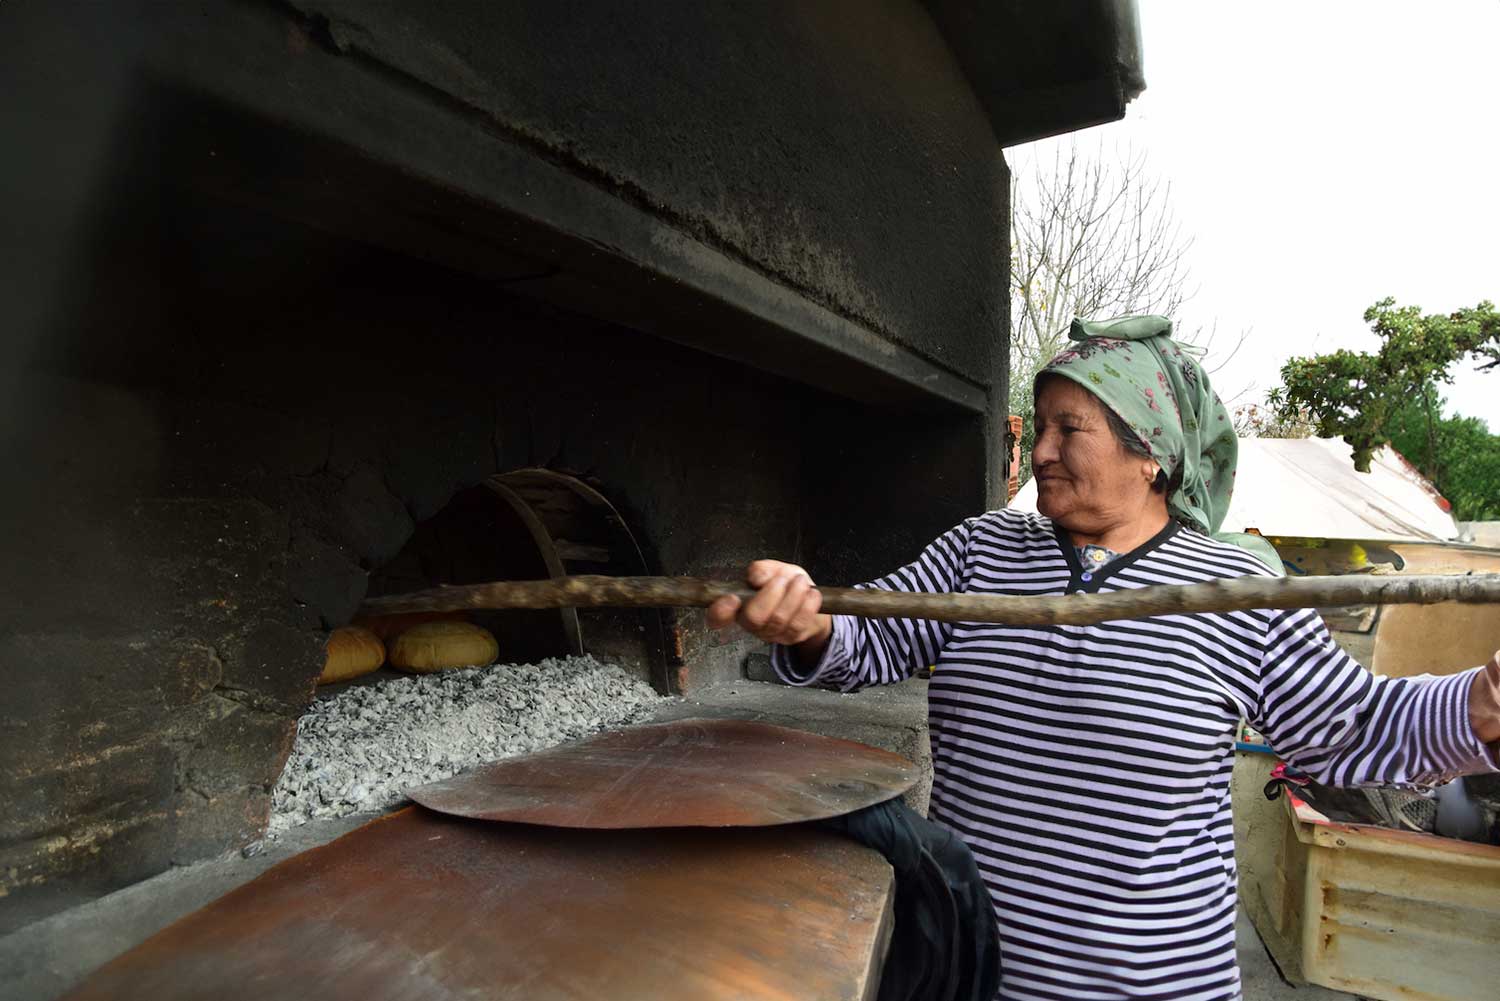 Adalet Kahraman prepares the ancestral bread recipe with Karakılçık wheat. © Ezgi Yeşilbaş